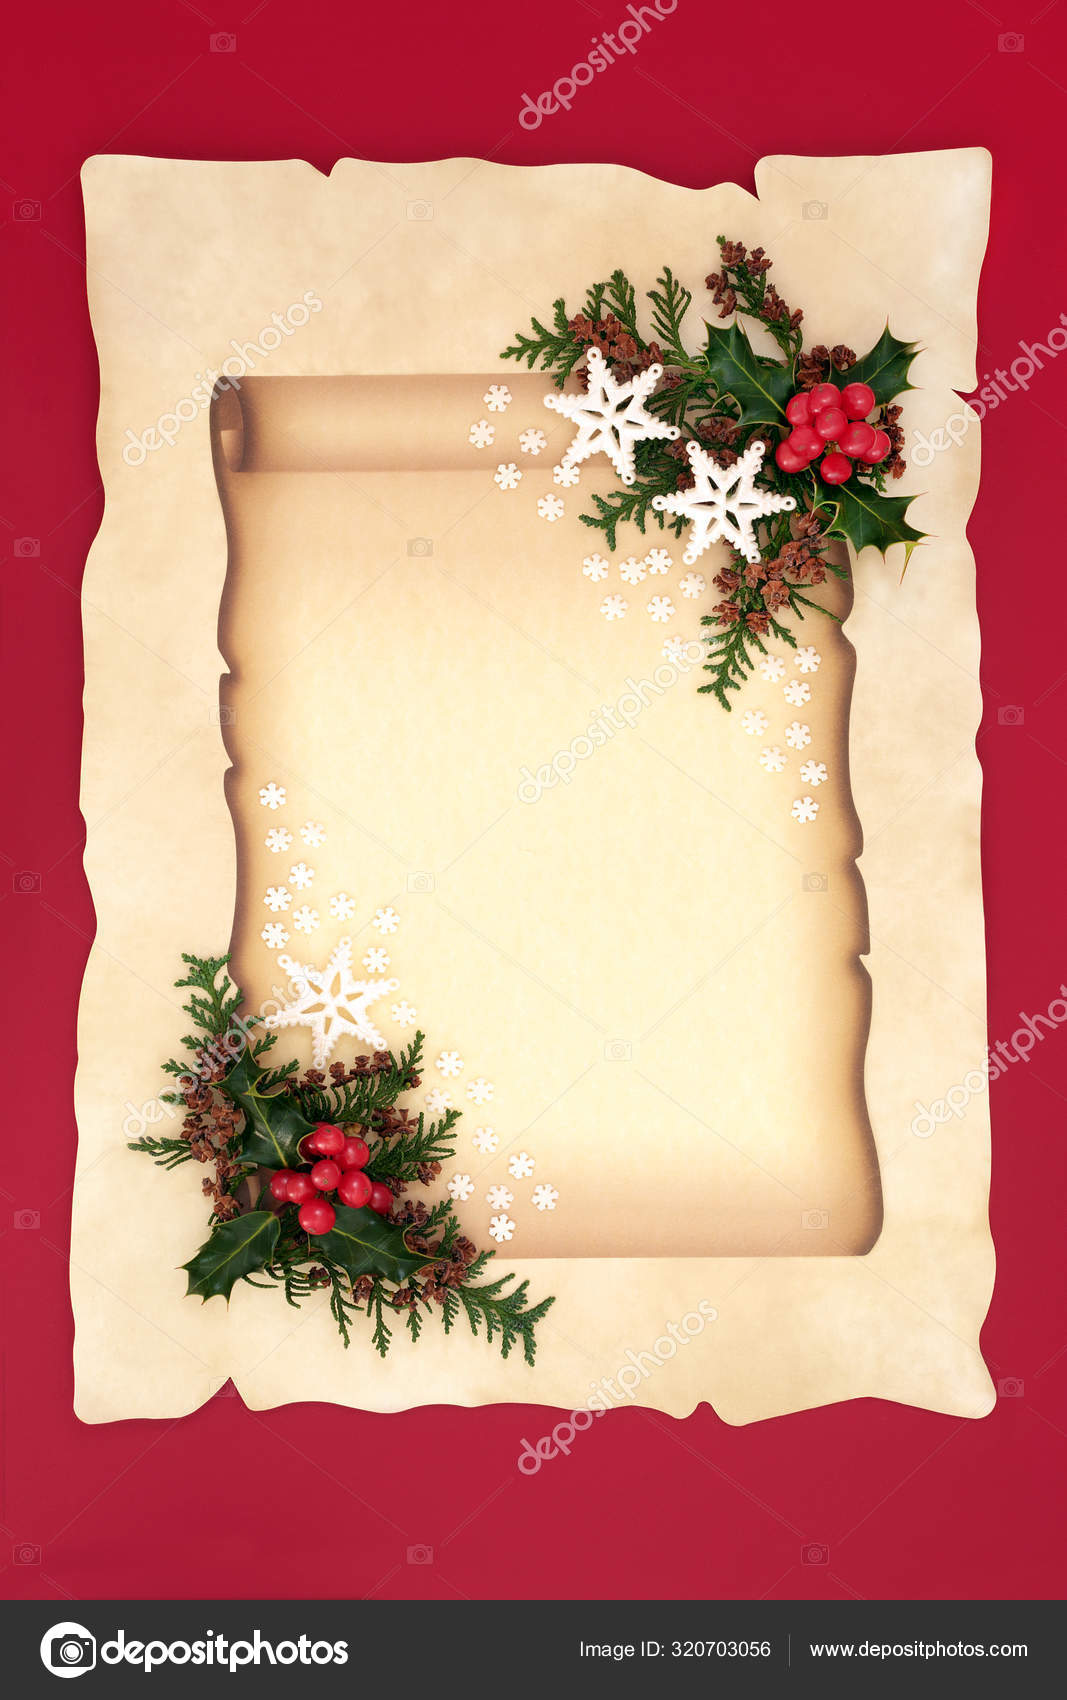 https://st3.depositphotos.com/1005573/32070/i/1600/depositphotos_320703056-stock-photo-christmas-scroll-on-parchment-paper.jpg